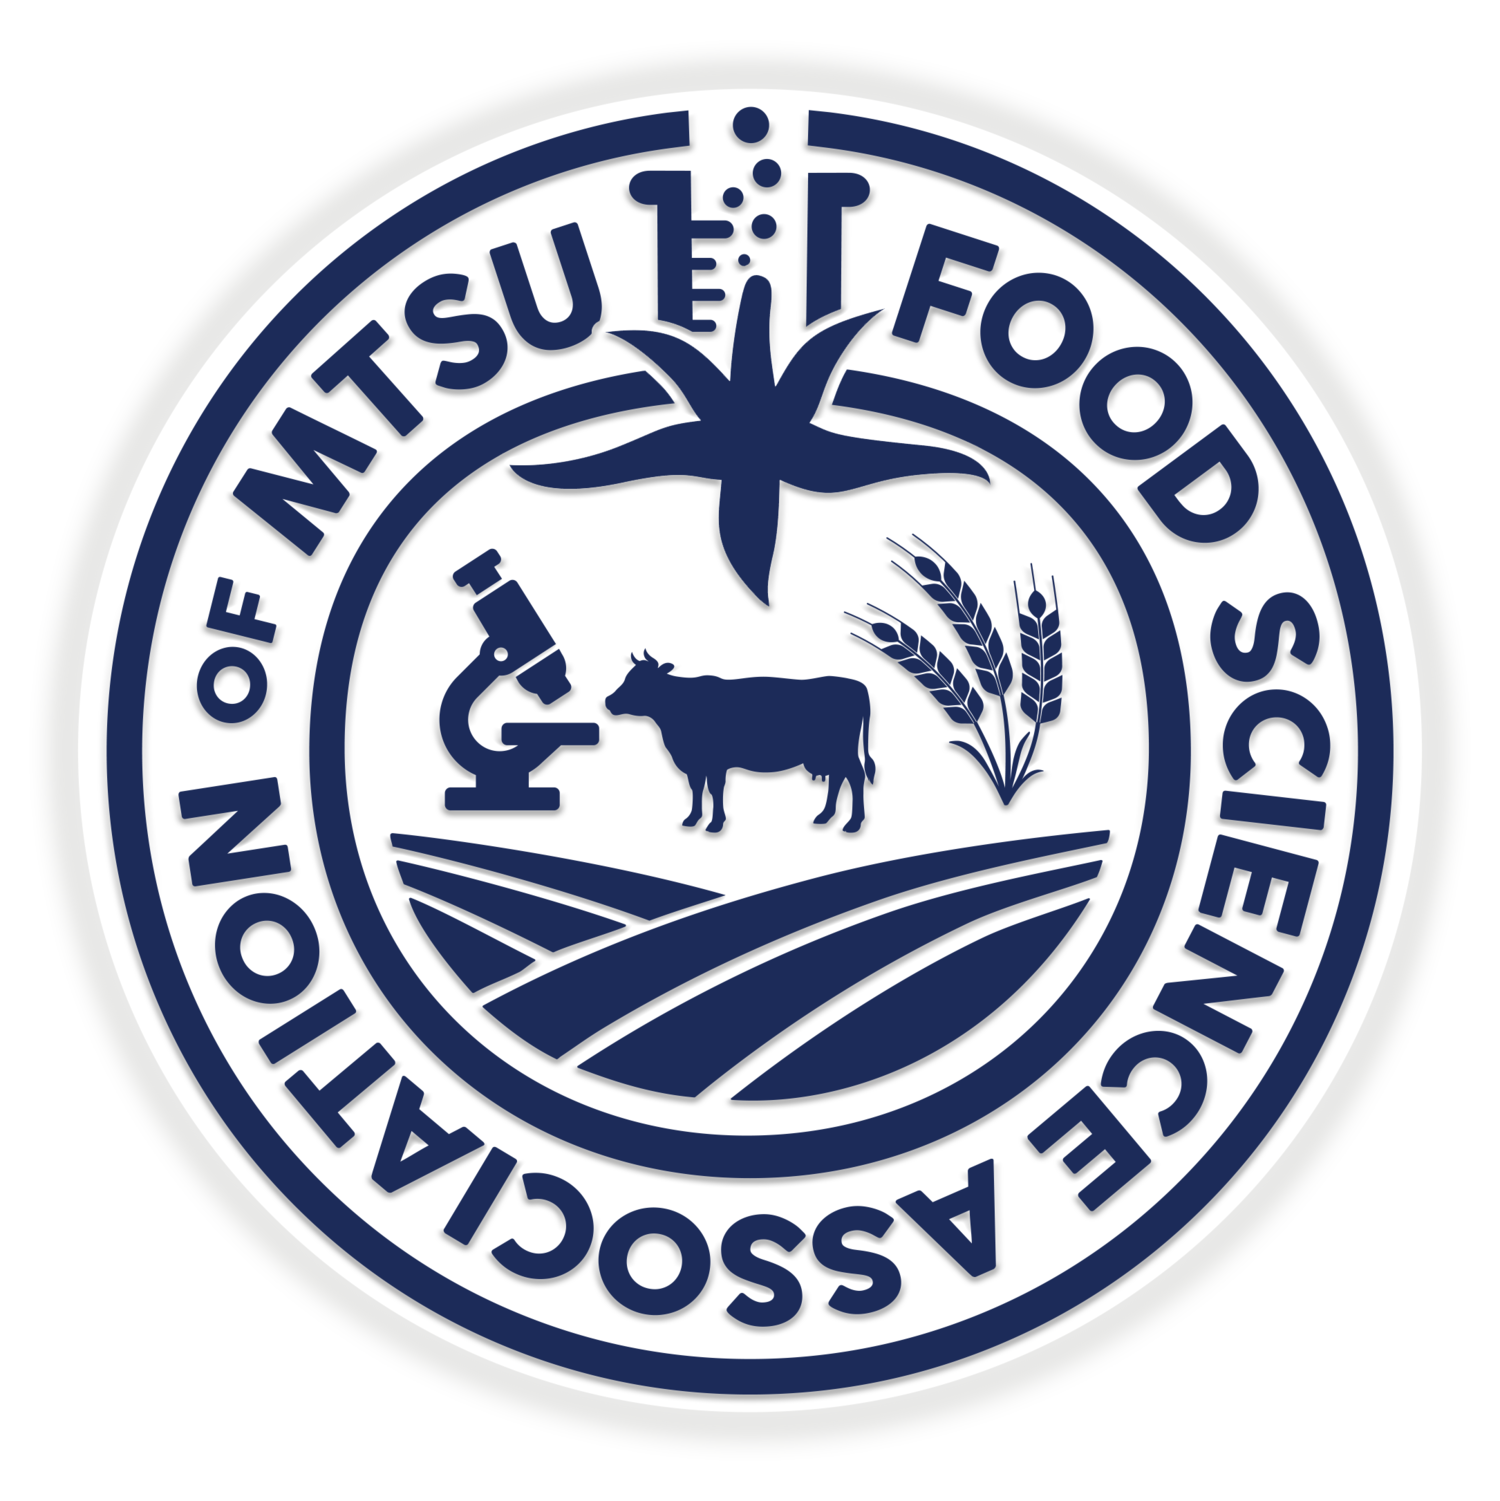 Food Science Association of MTSU